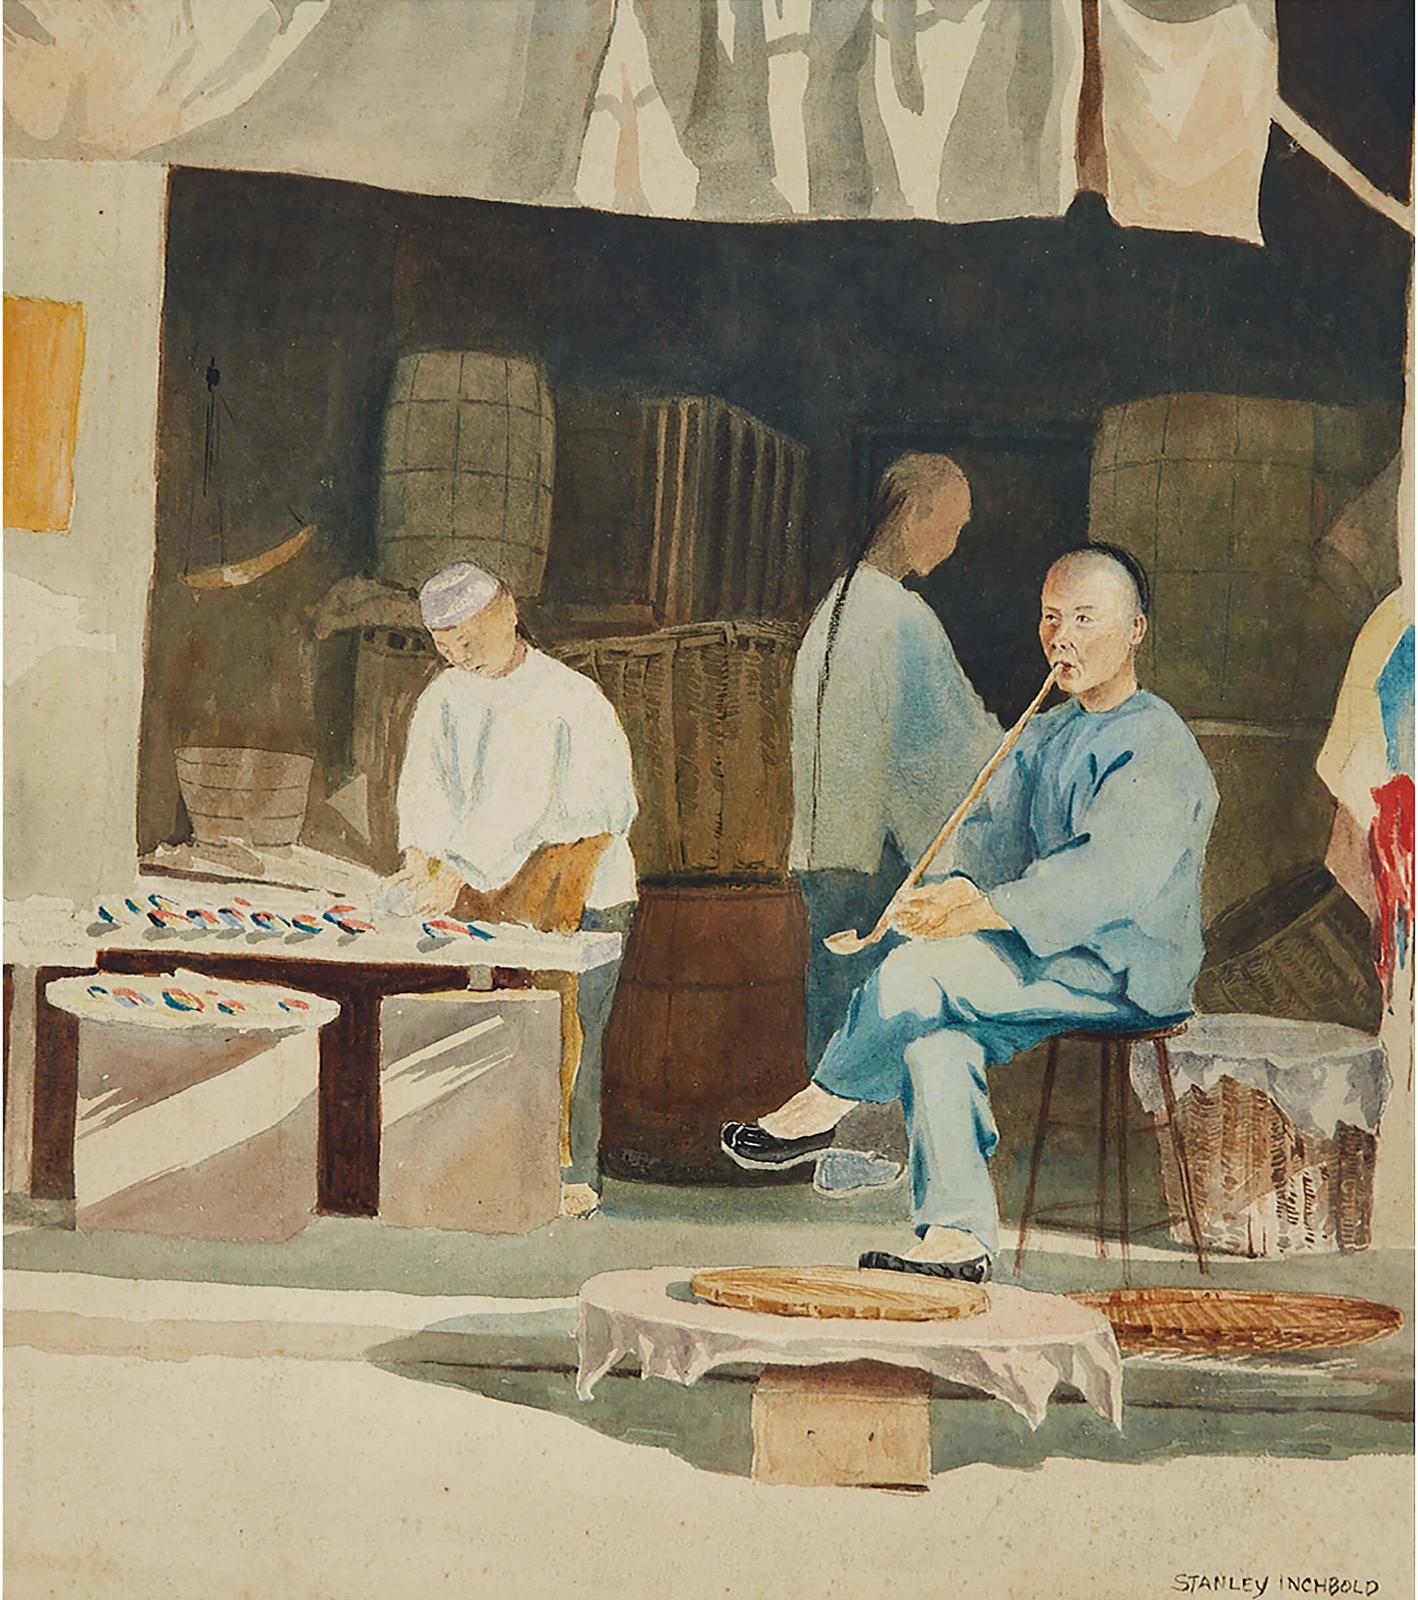 Edward Stanley Inchbold (1855-1934) - Hong Kong Market Vendors